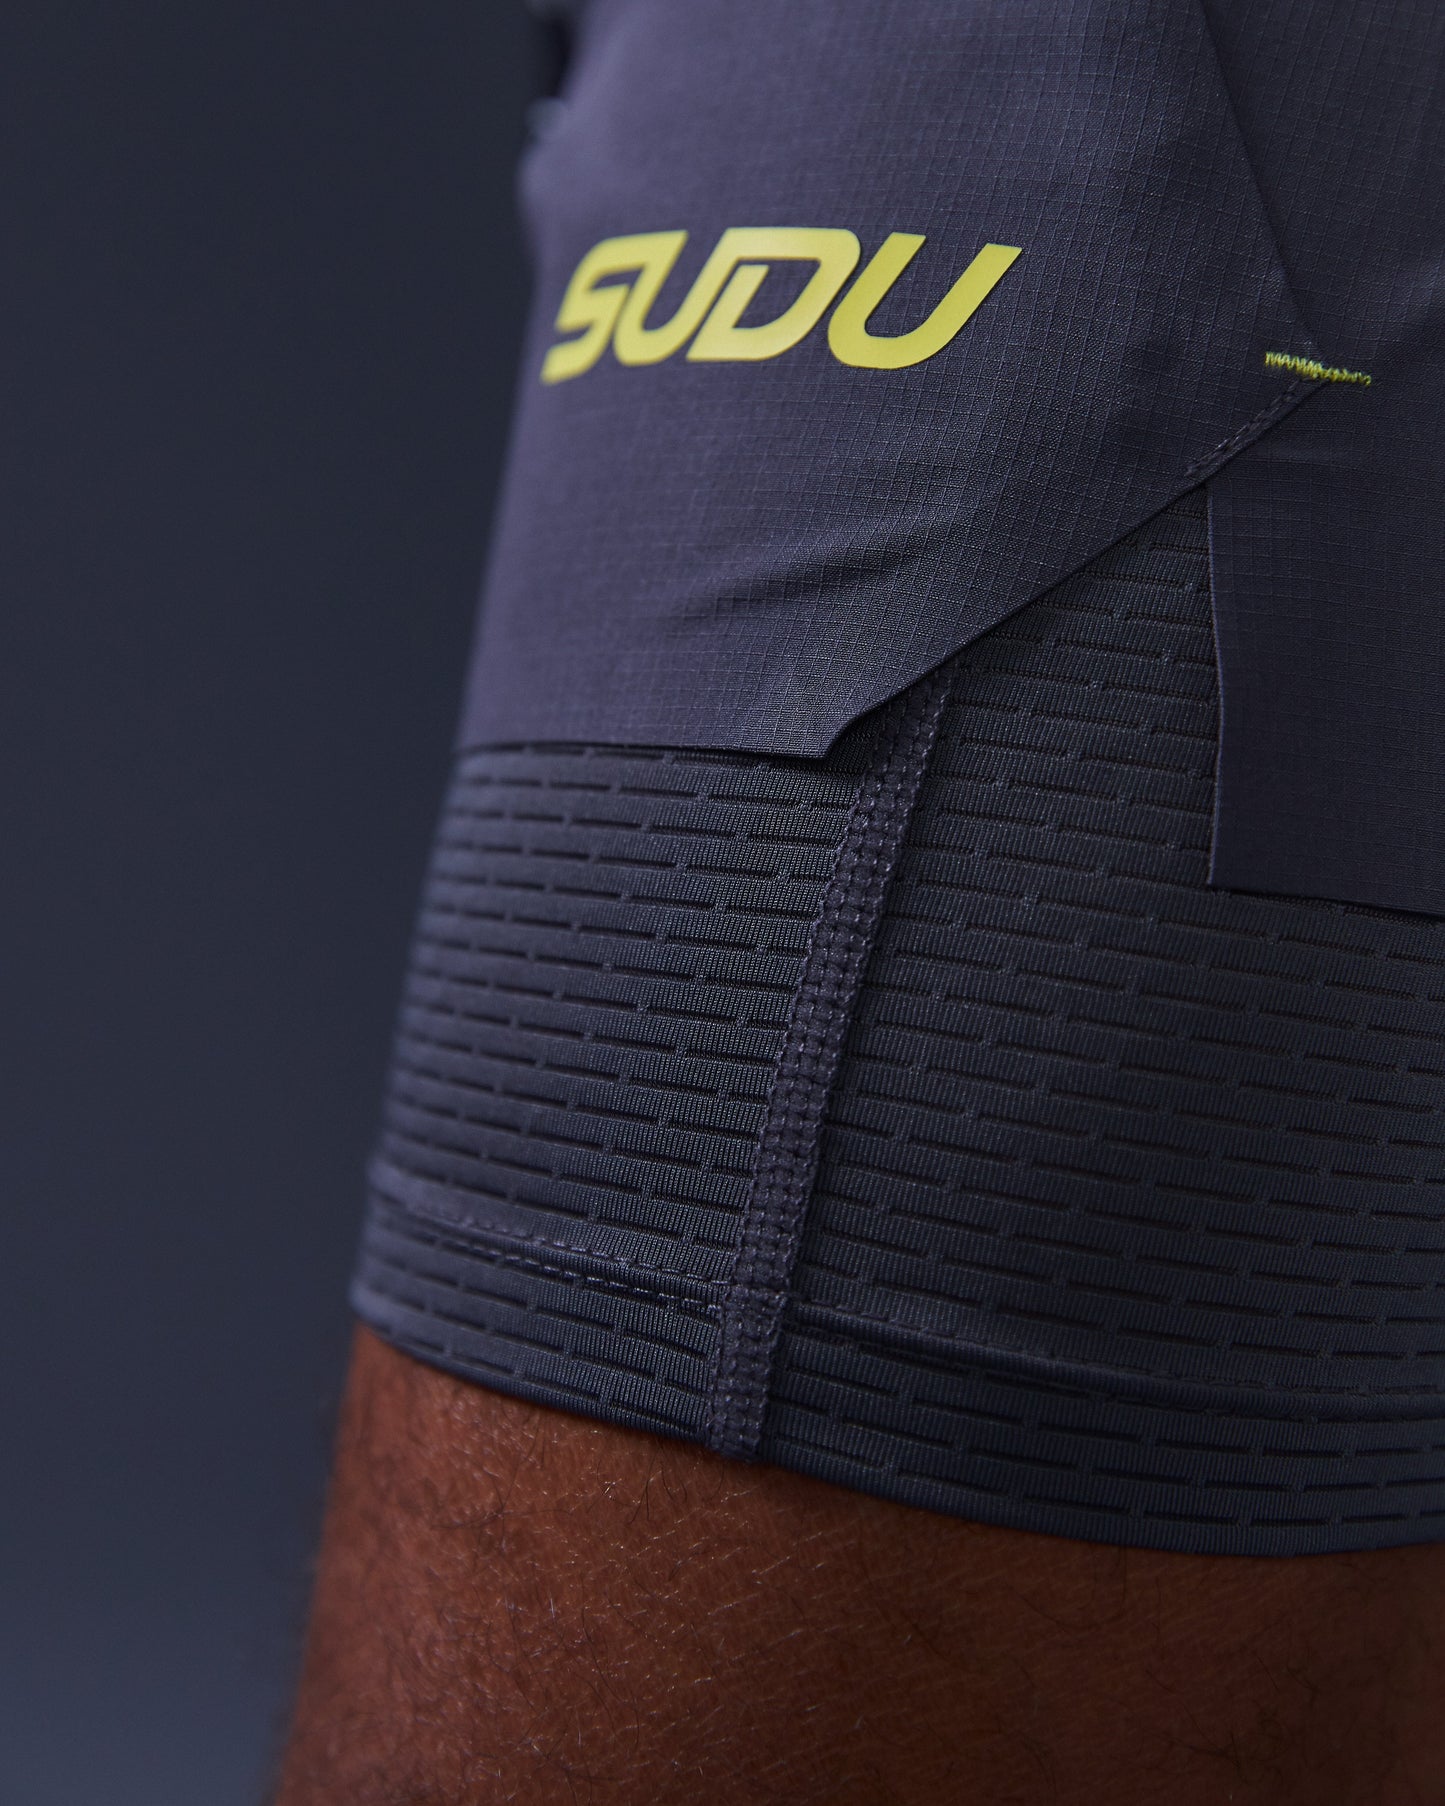 SUDU SRS 01 Run Shorts - Iron Gate / Blazing Yellow Shorts